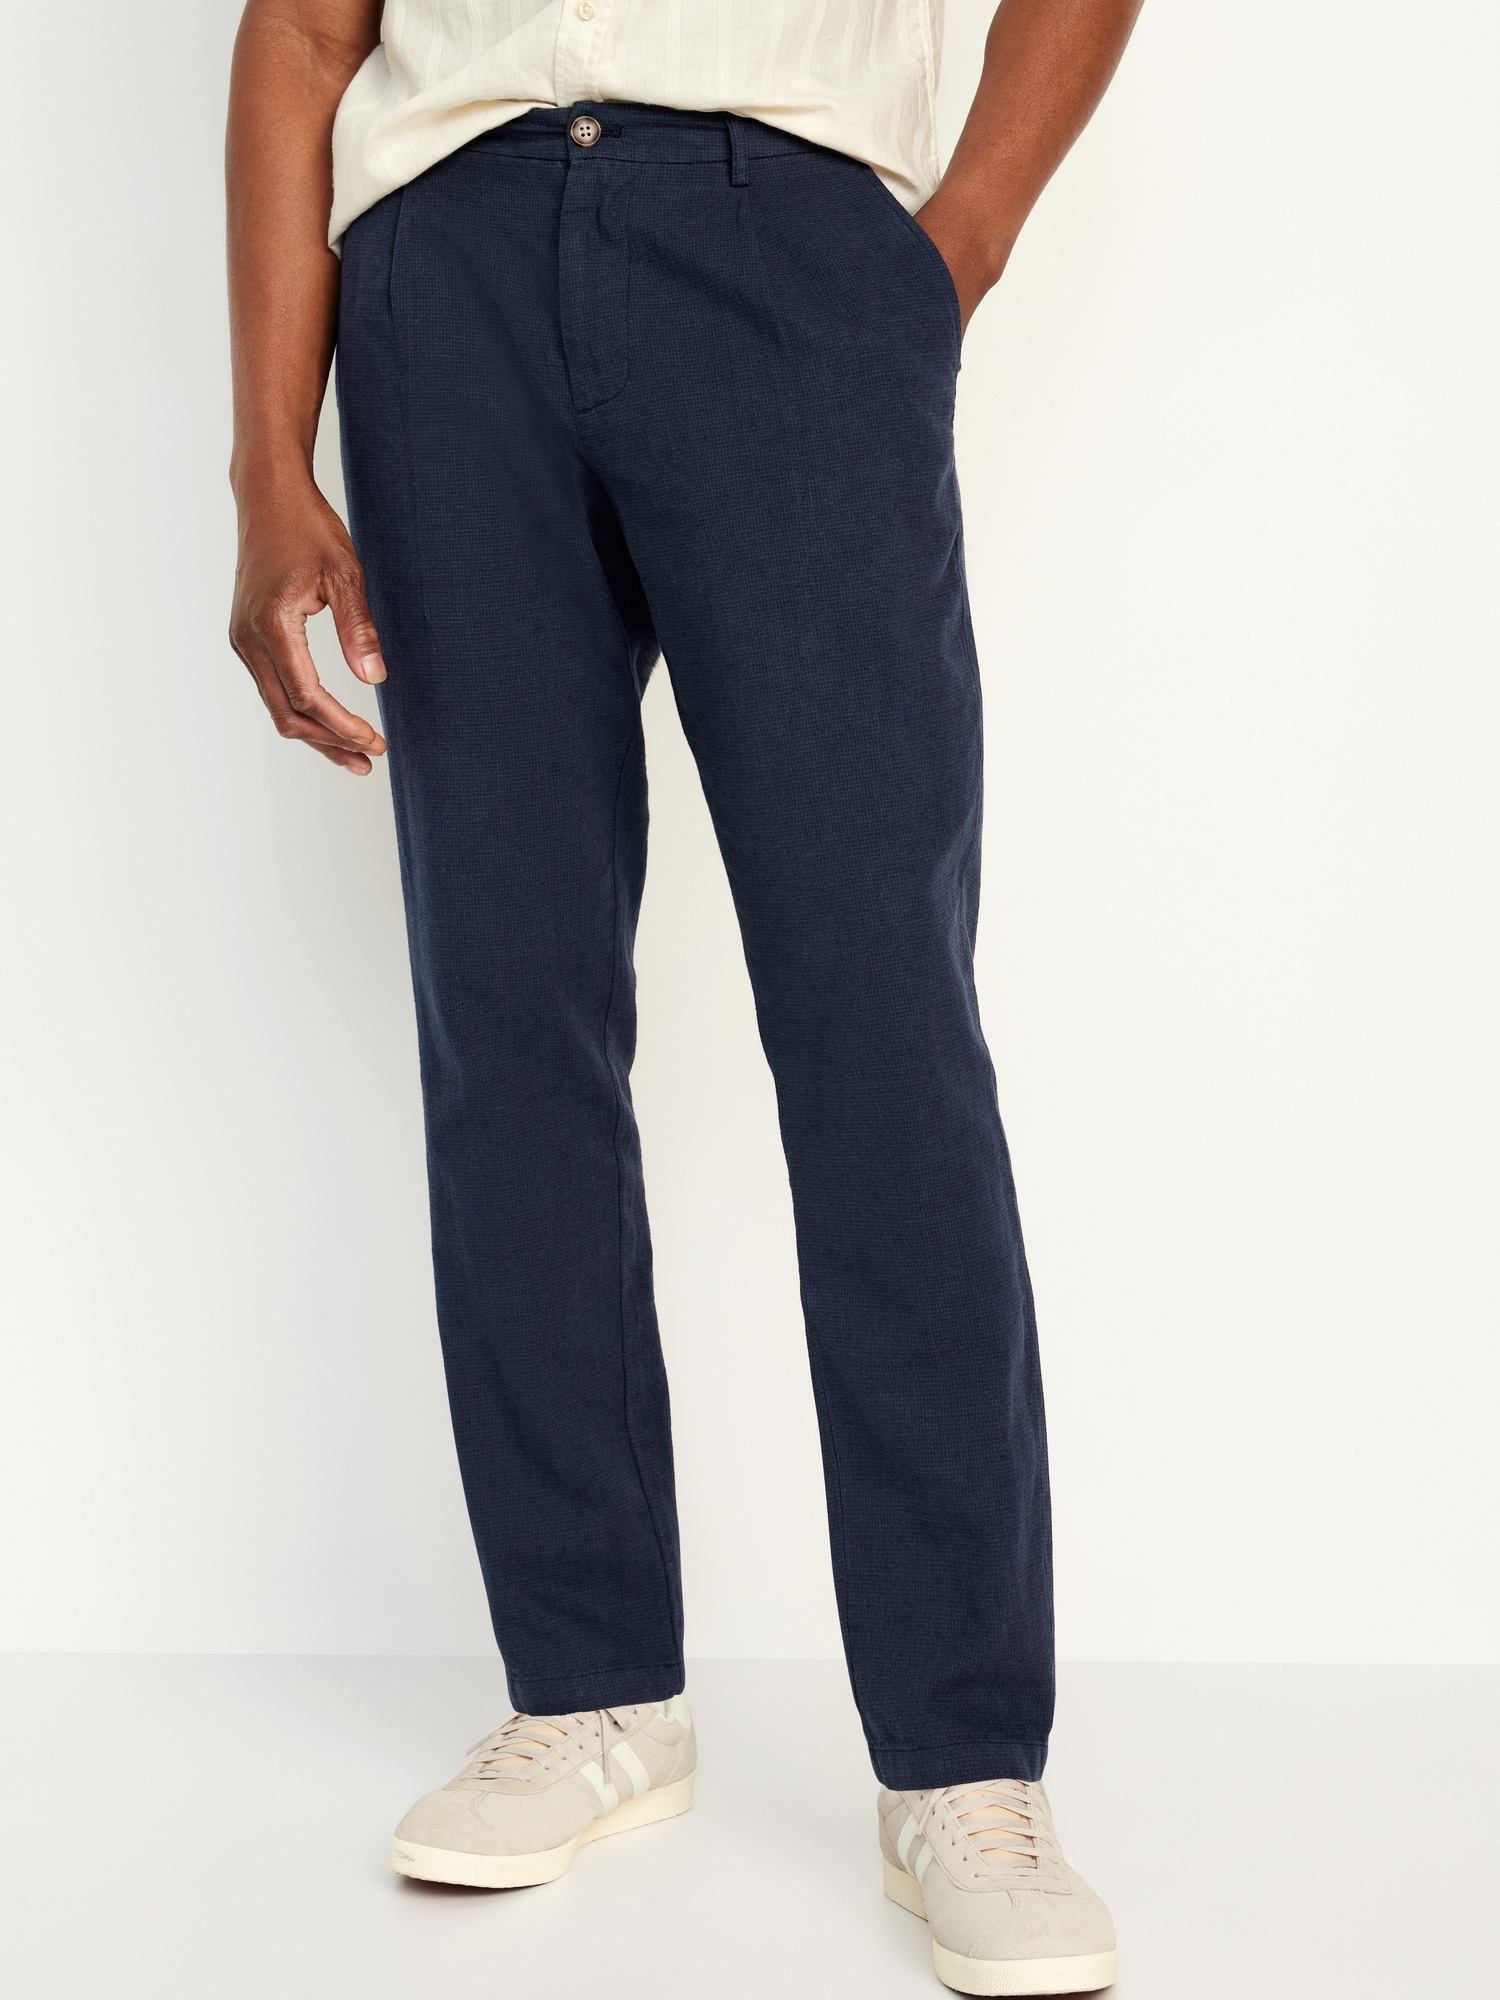 Farfi Pants Warm Casual Breathable Breathable Elastic Ankle Pants Hip Hop  for Men - Walmart.com